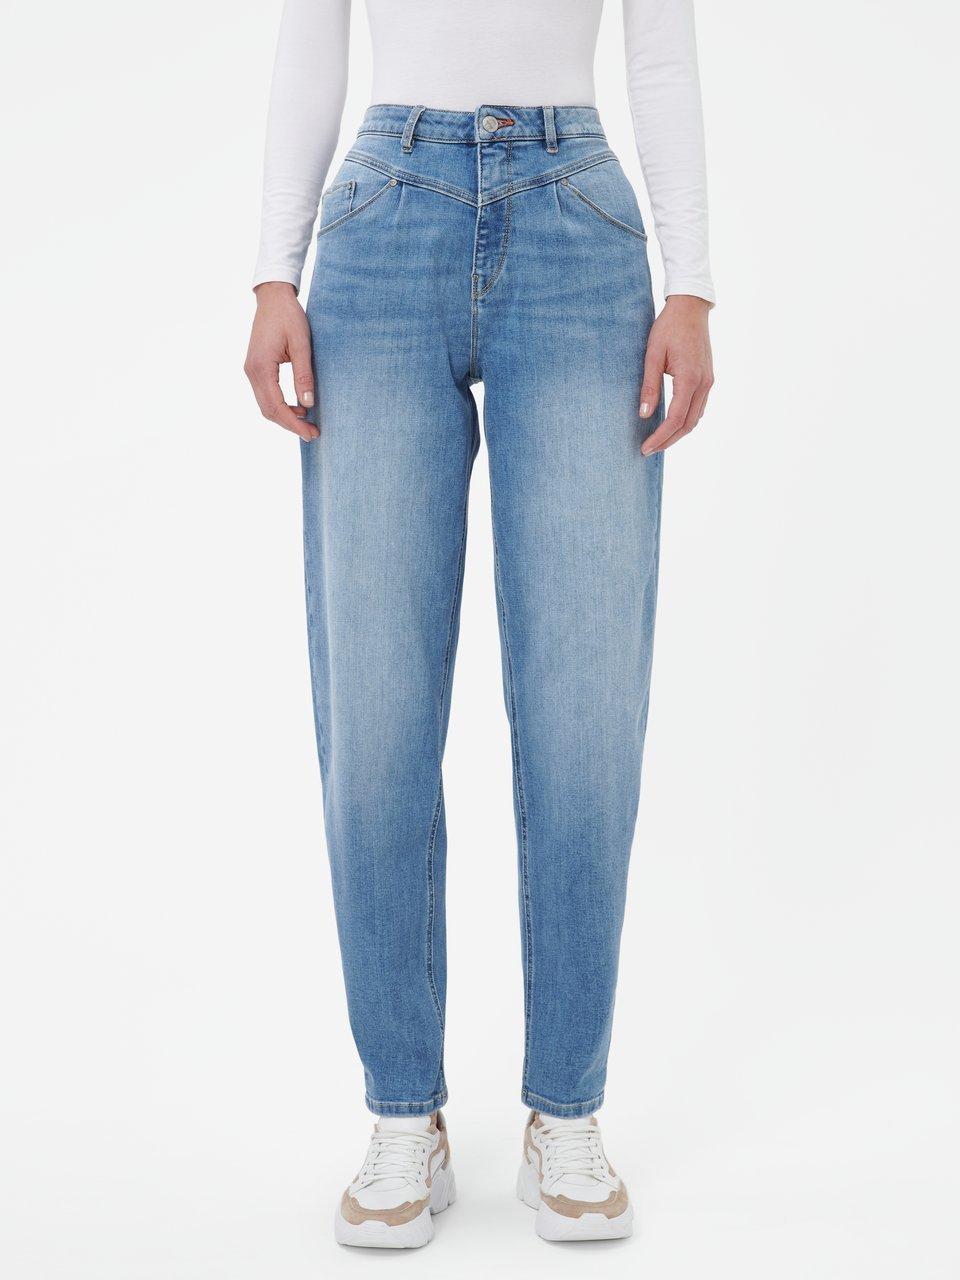 Five Fellas - Jeans 'Olivia' in inchlengte 30